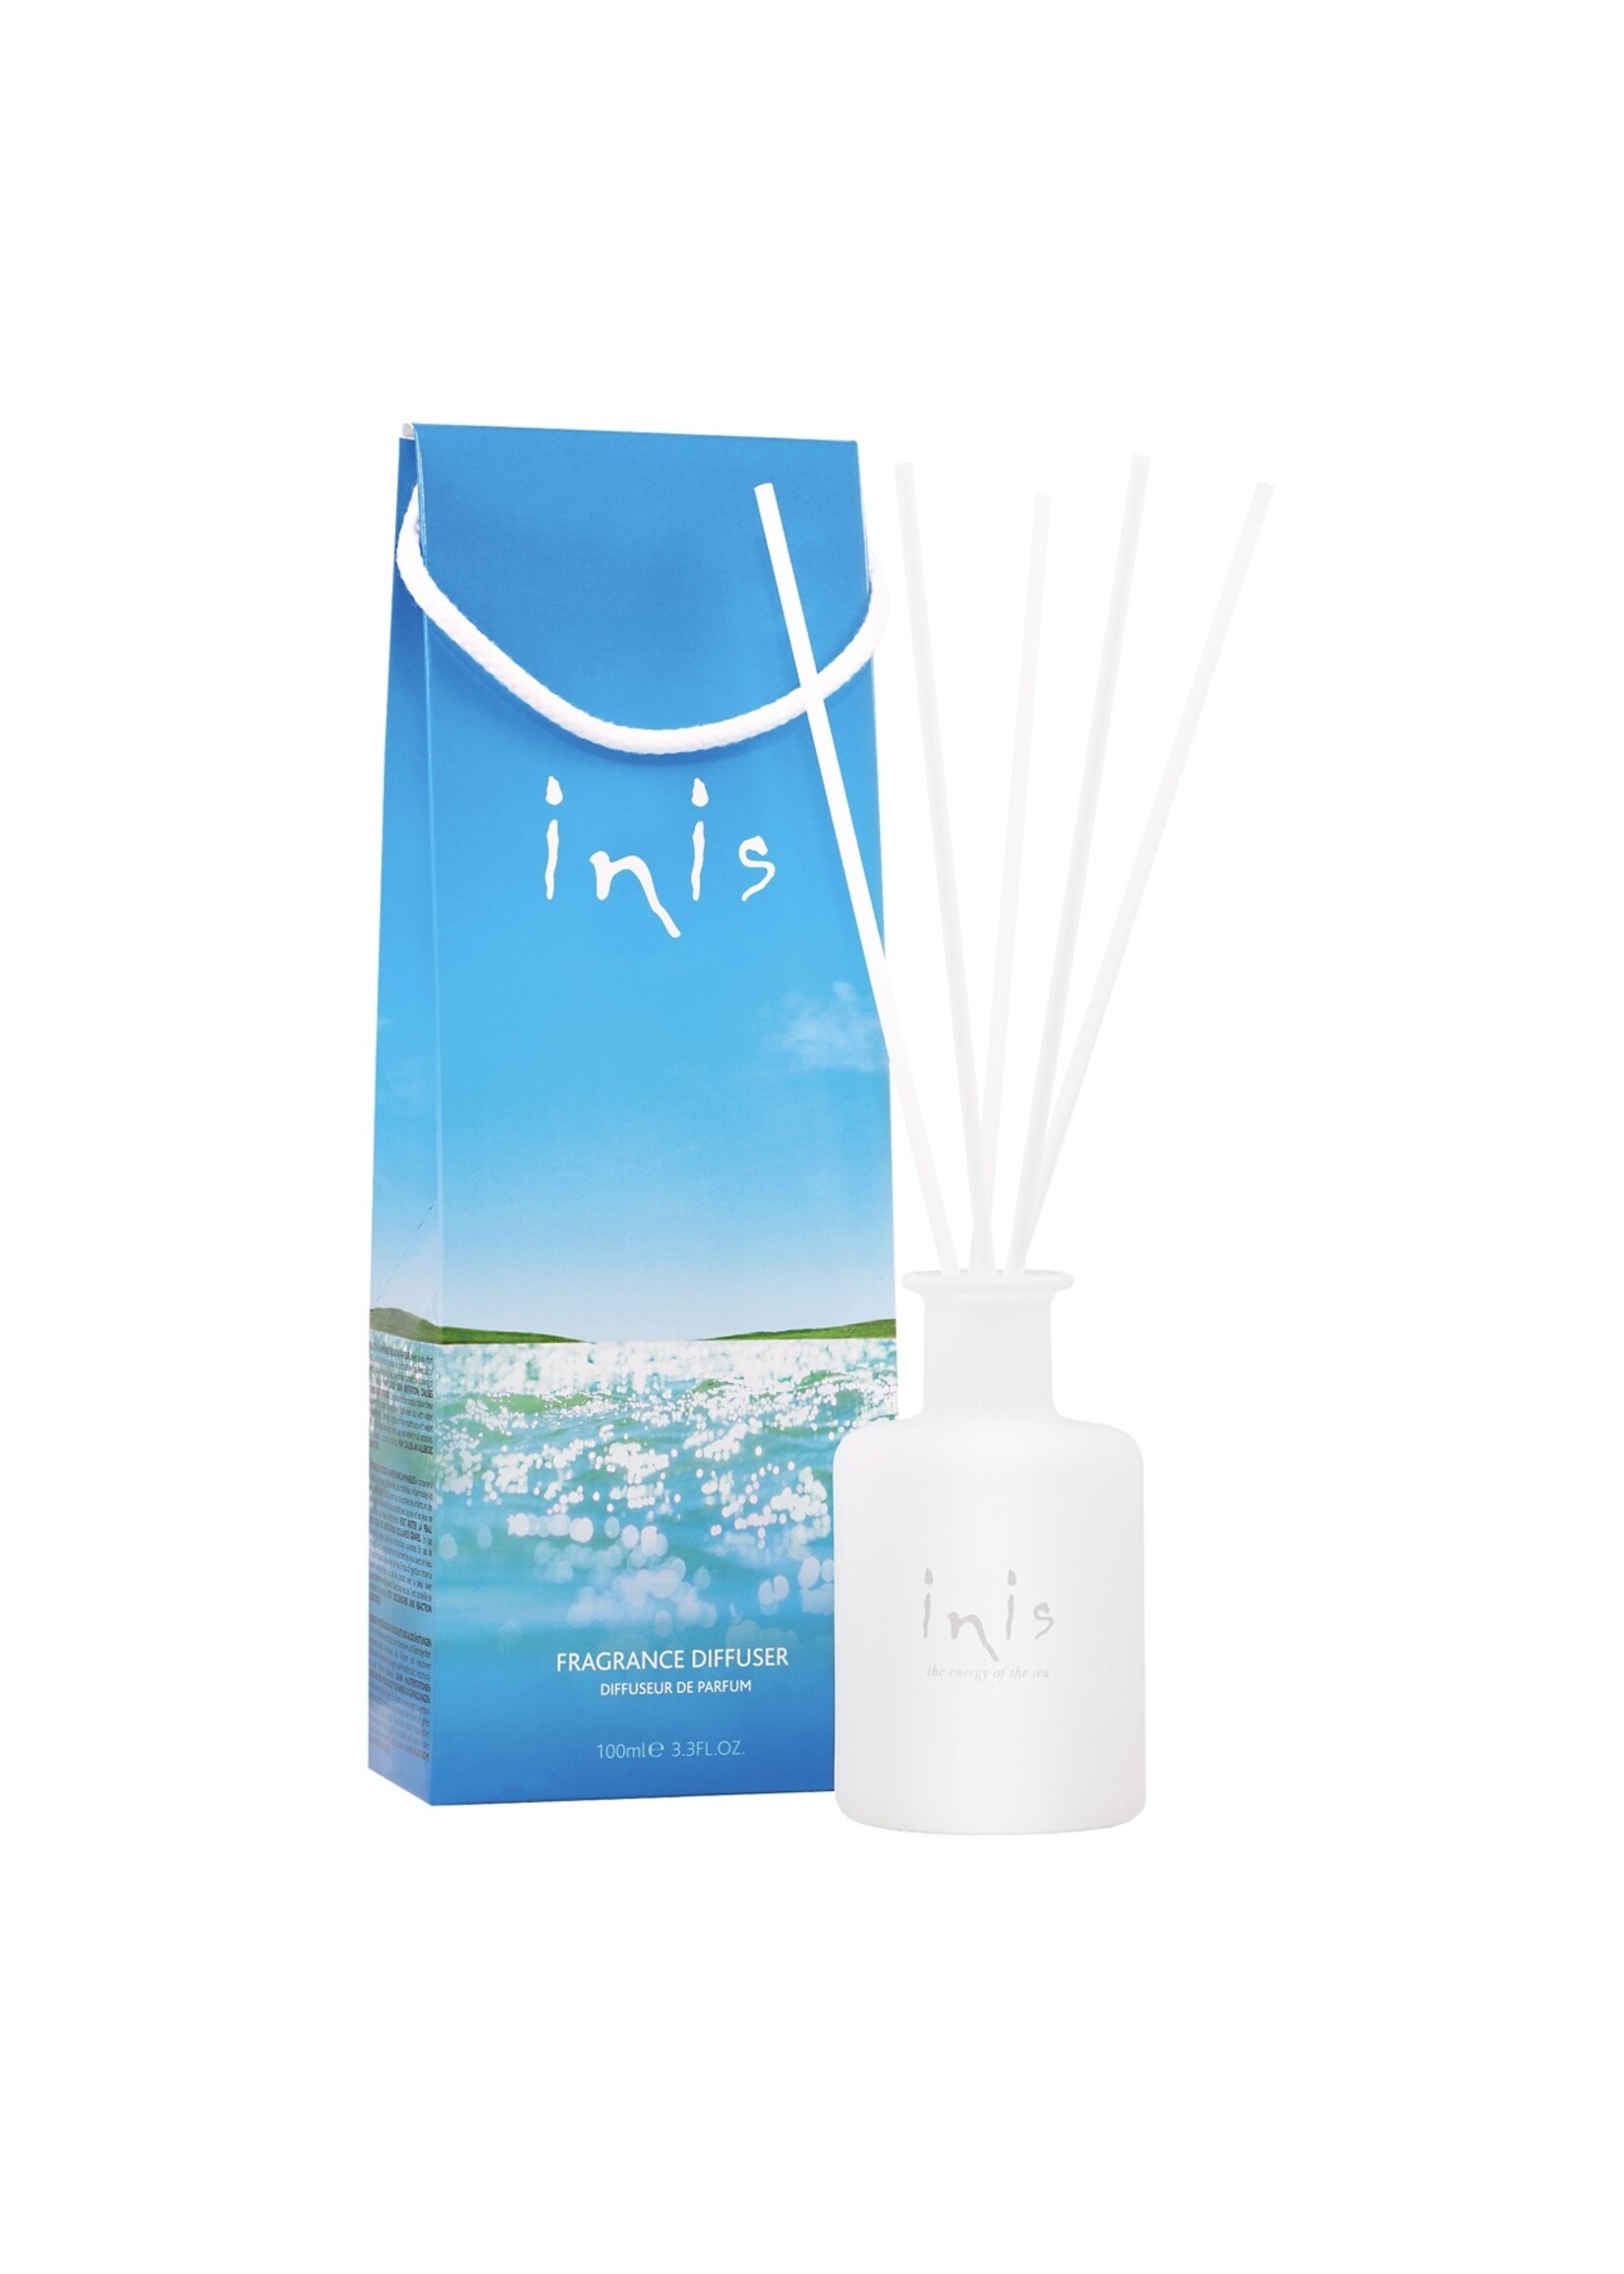 Inis Fragrance Diffuser-3.3 fl oz